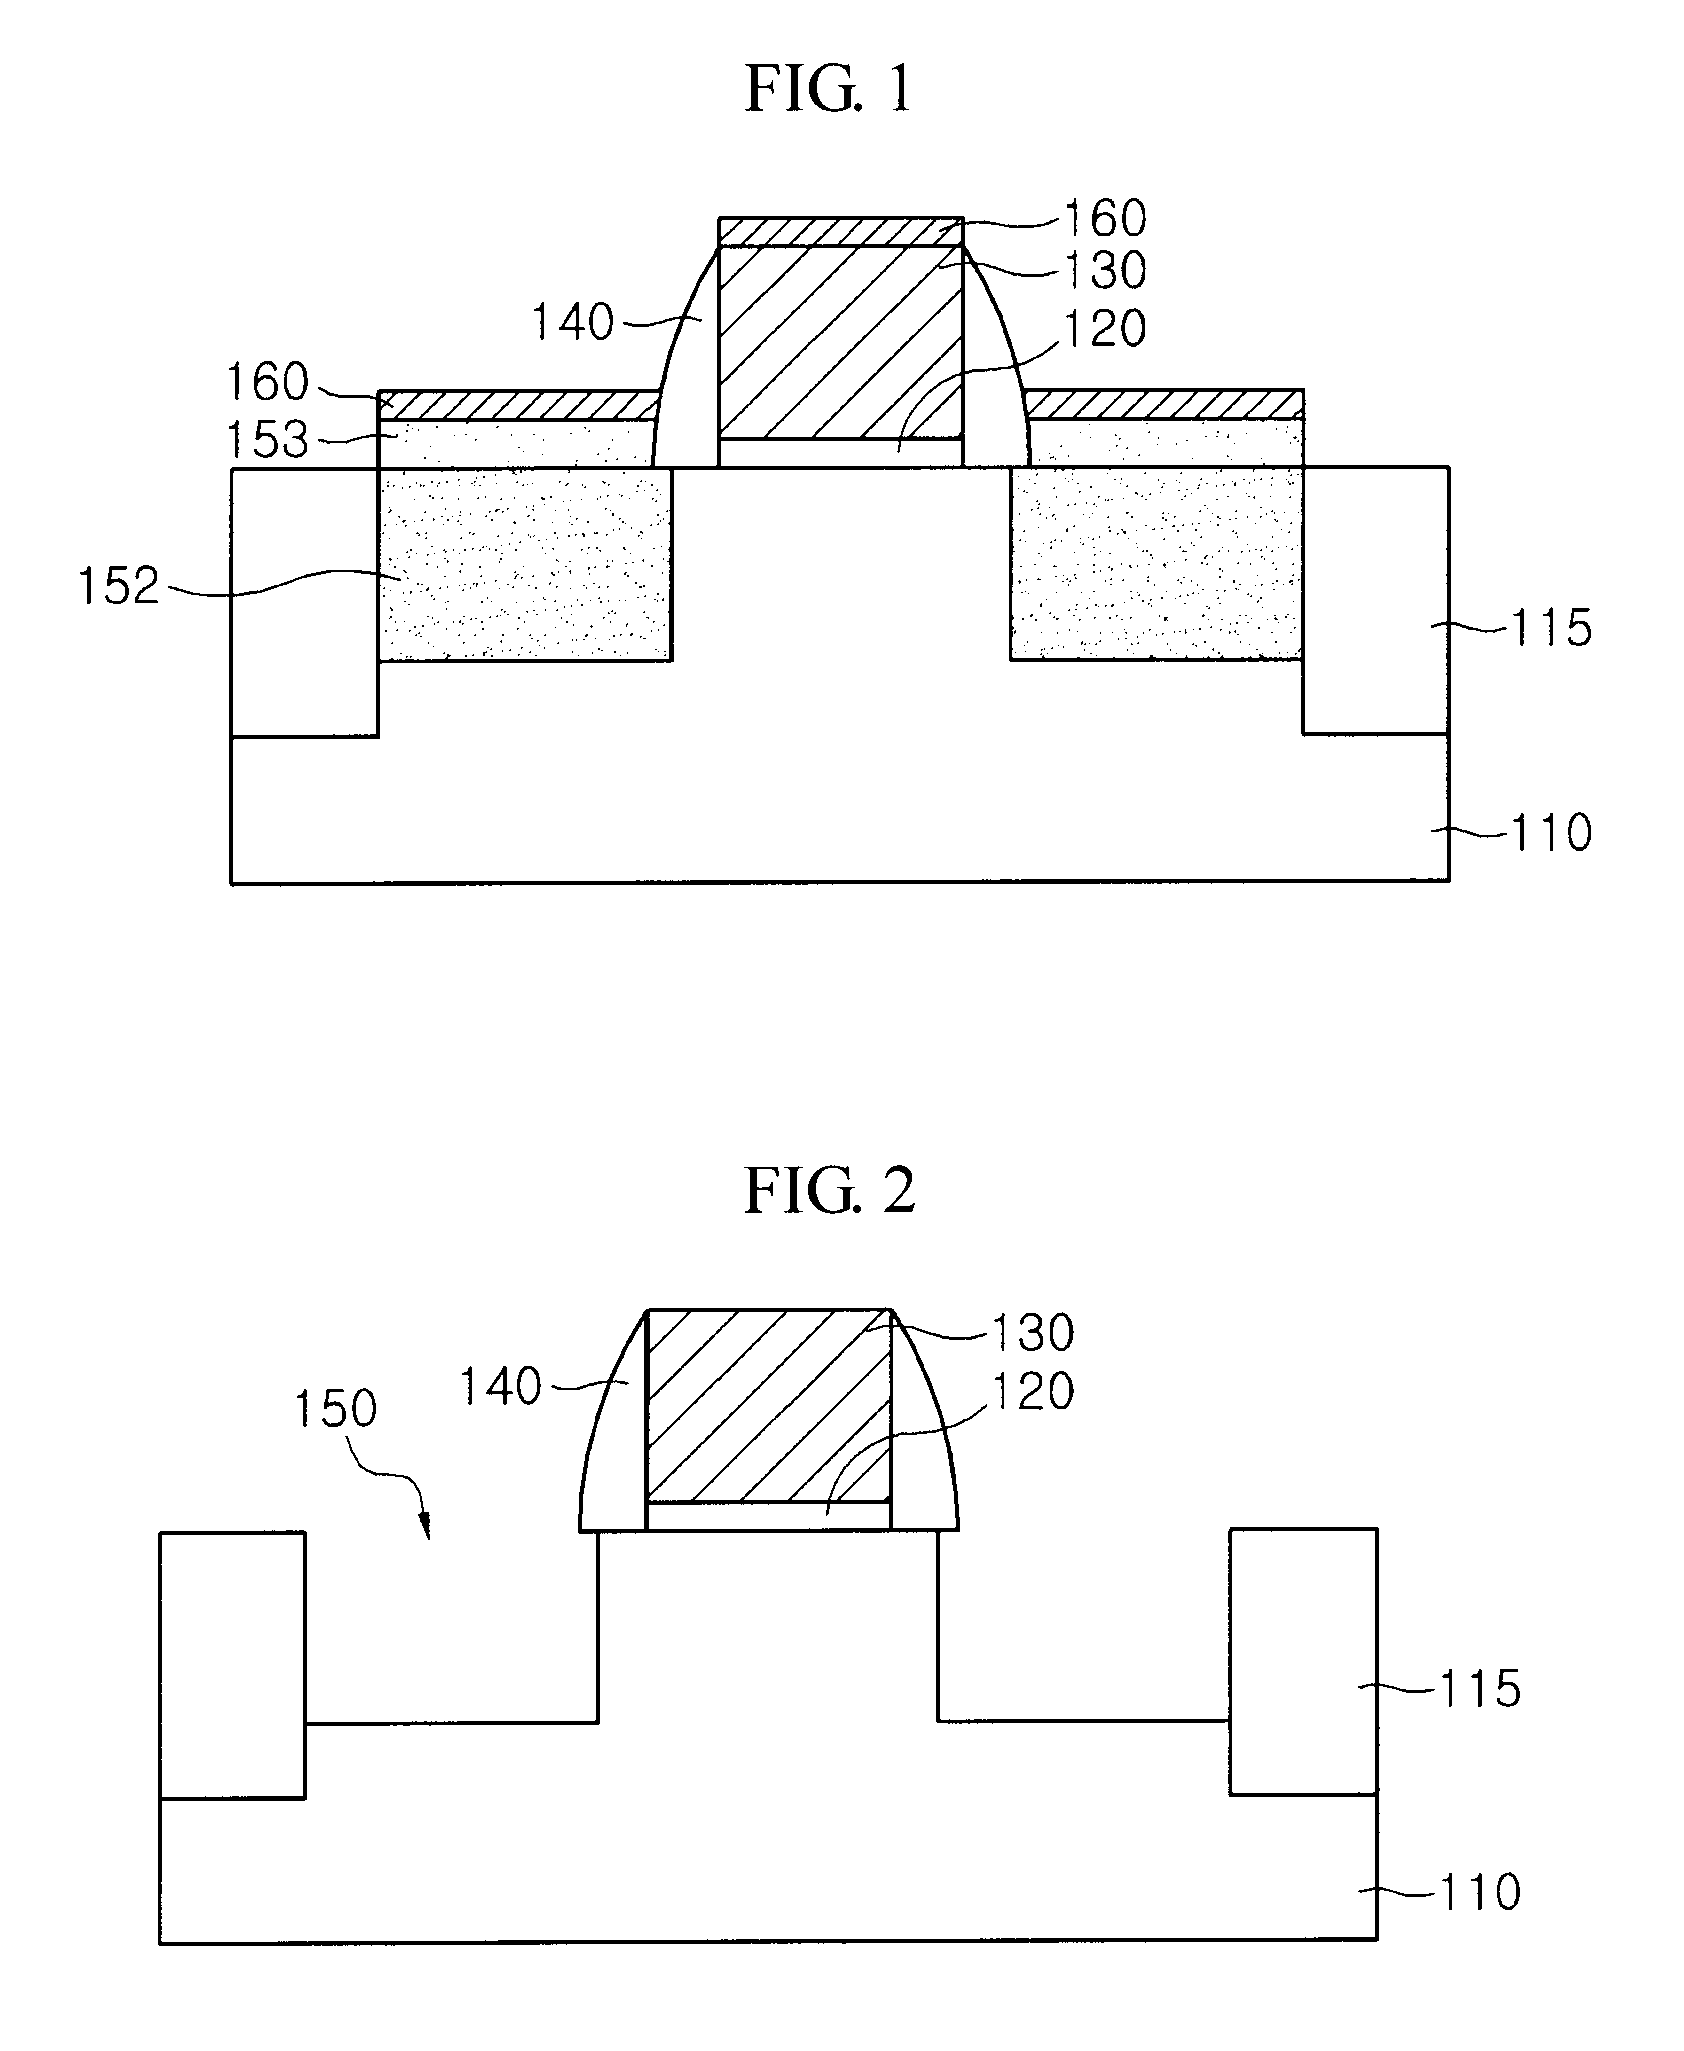 Transistor and method of fabricating the same